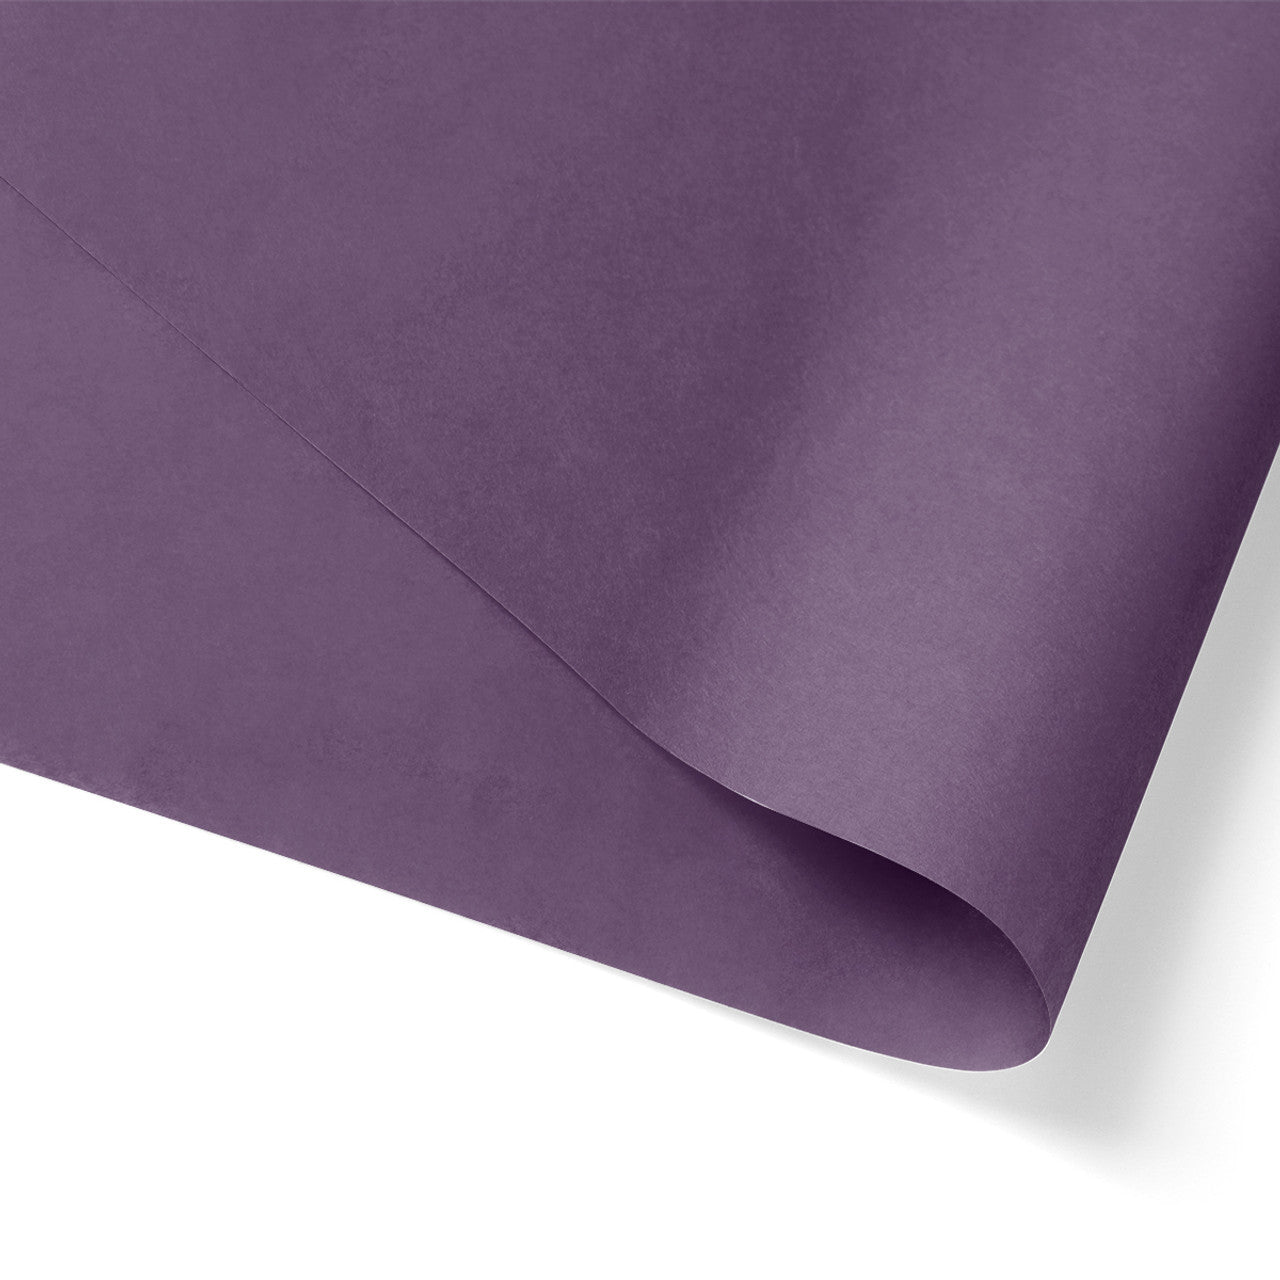 480pcs 20x30 inches Purple Solid Tissue Paper; $0.05/pc